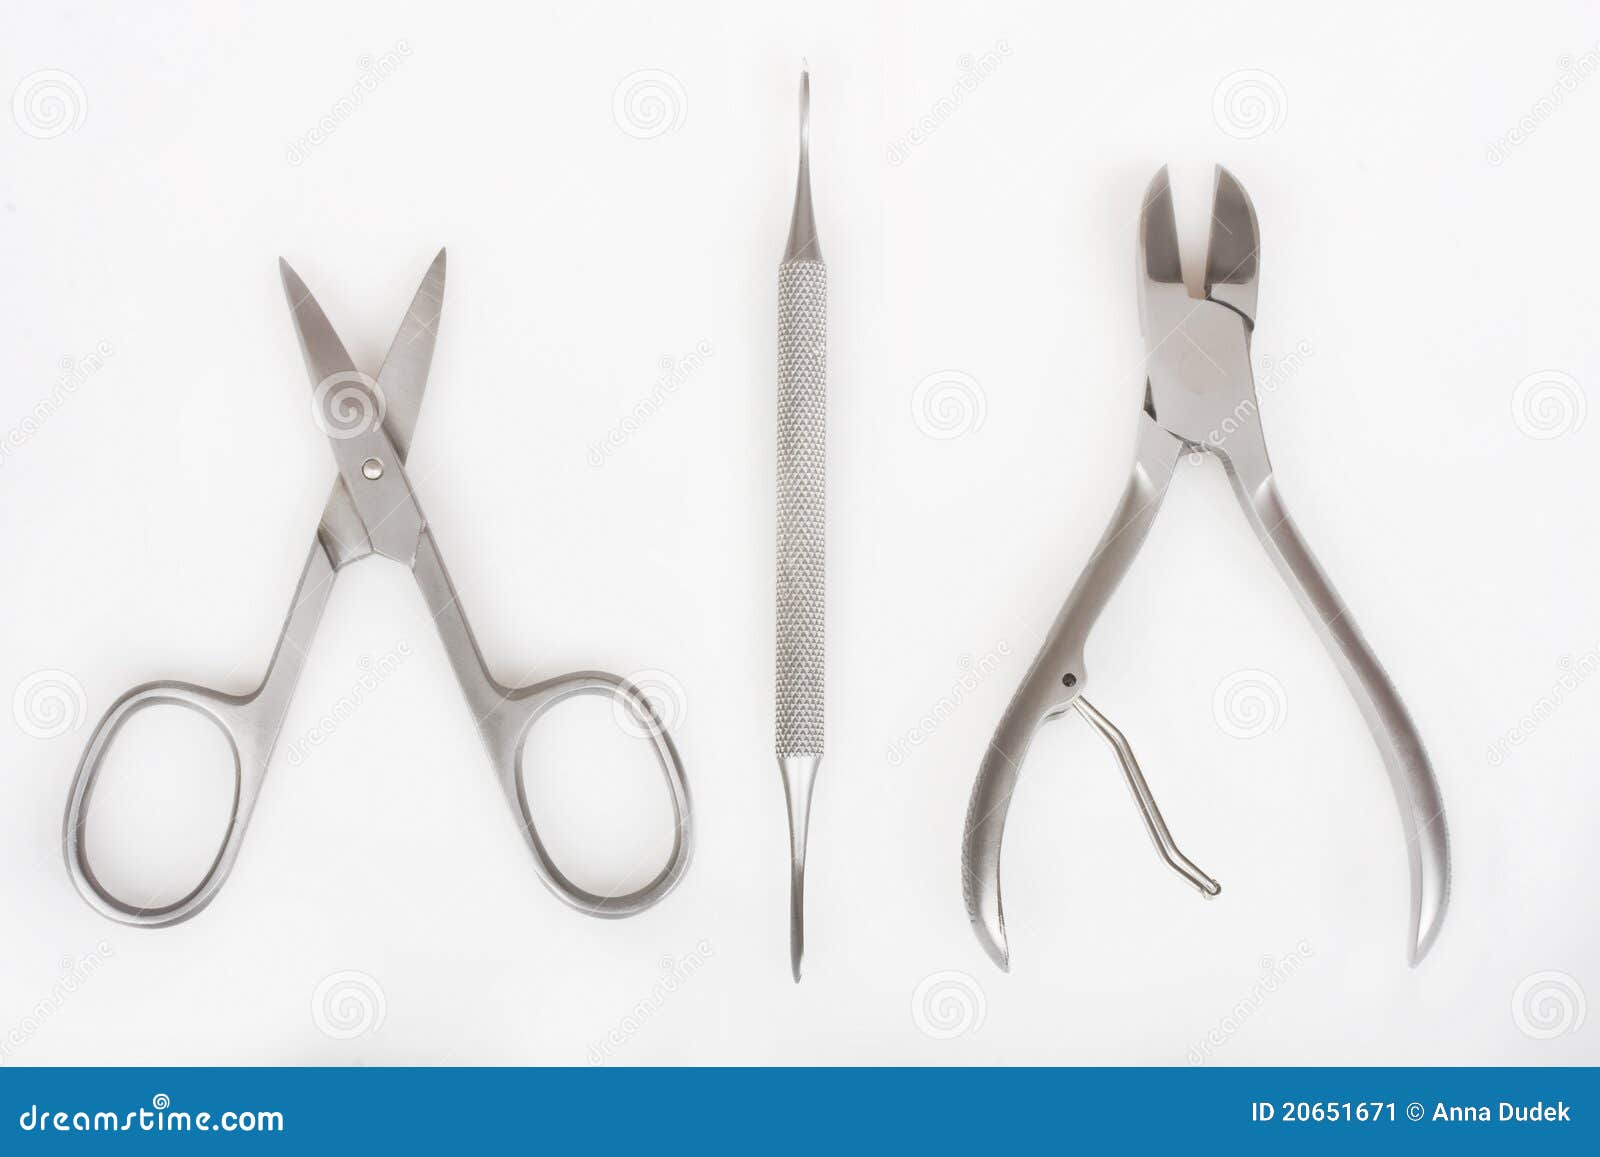 Manicure tools stock image. Image of equipment, steel - 20651671